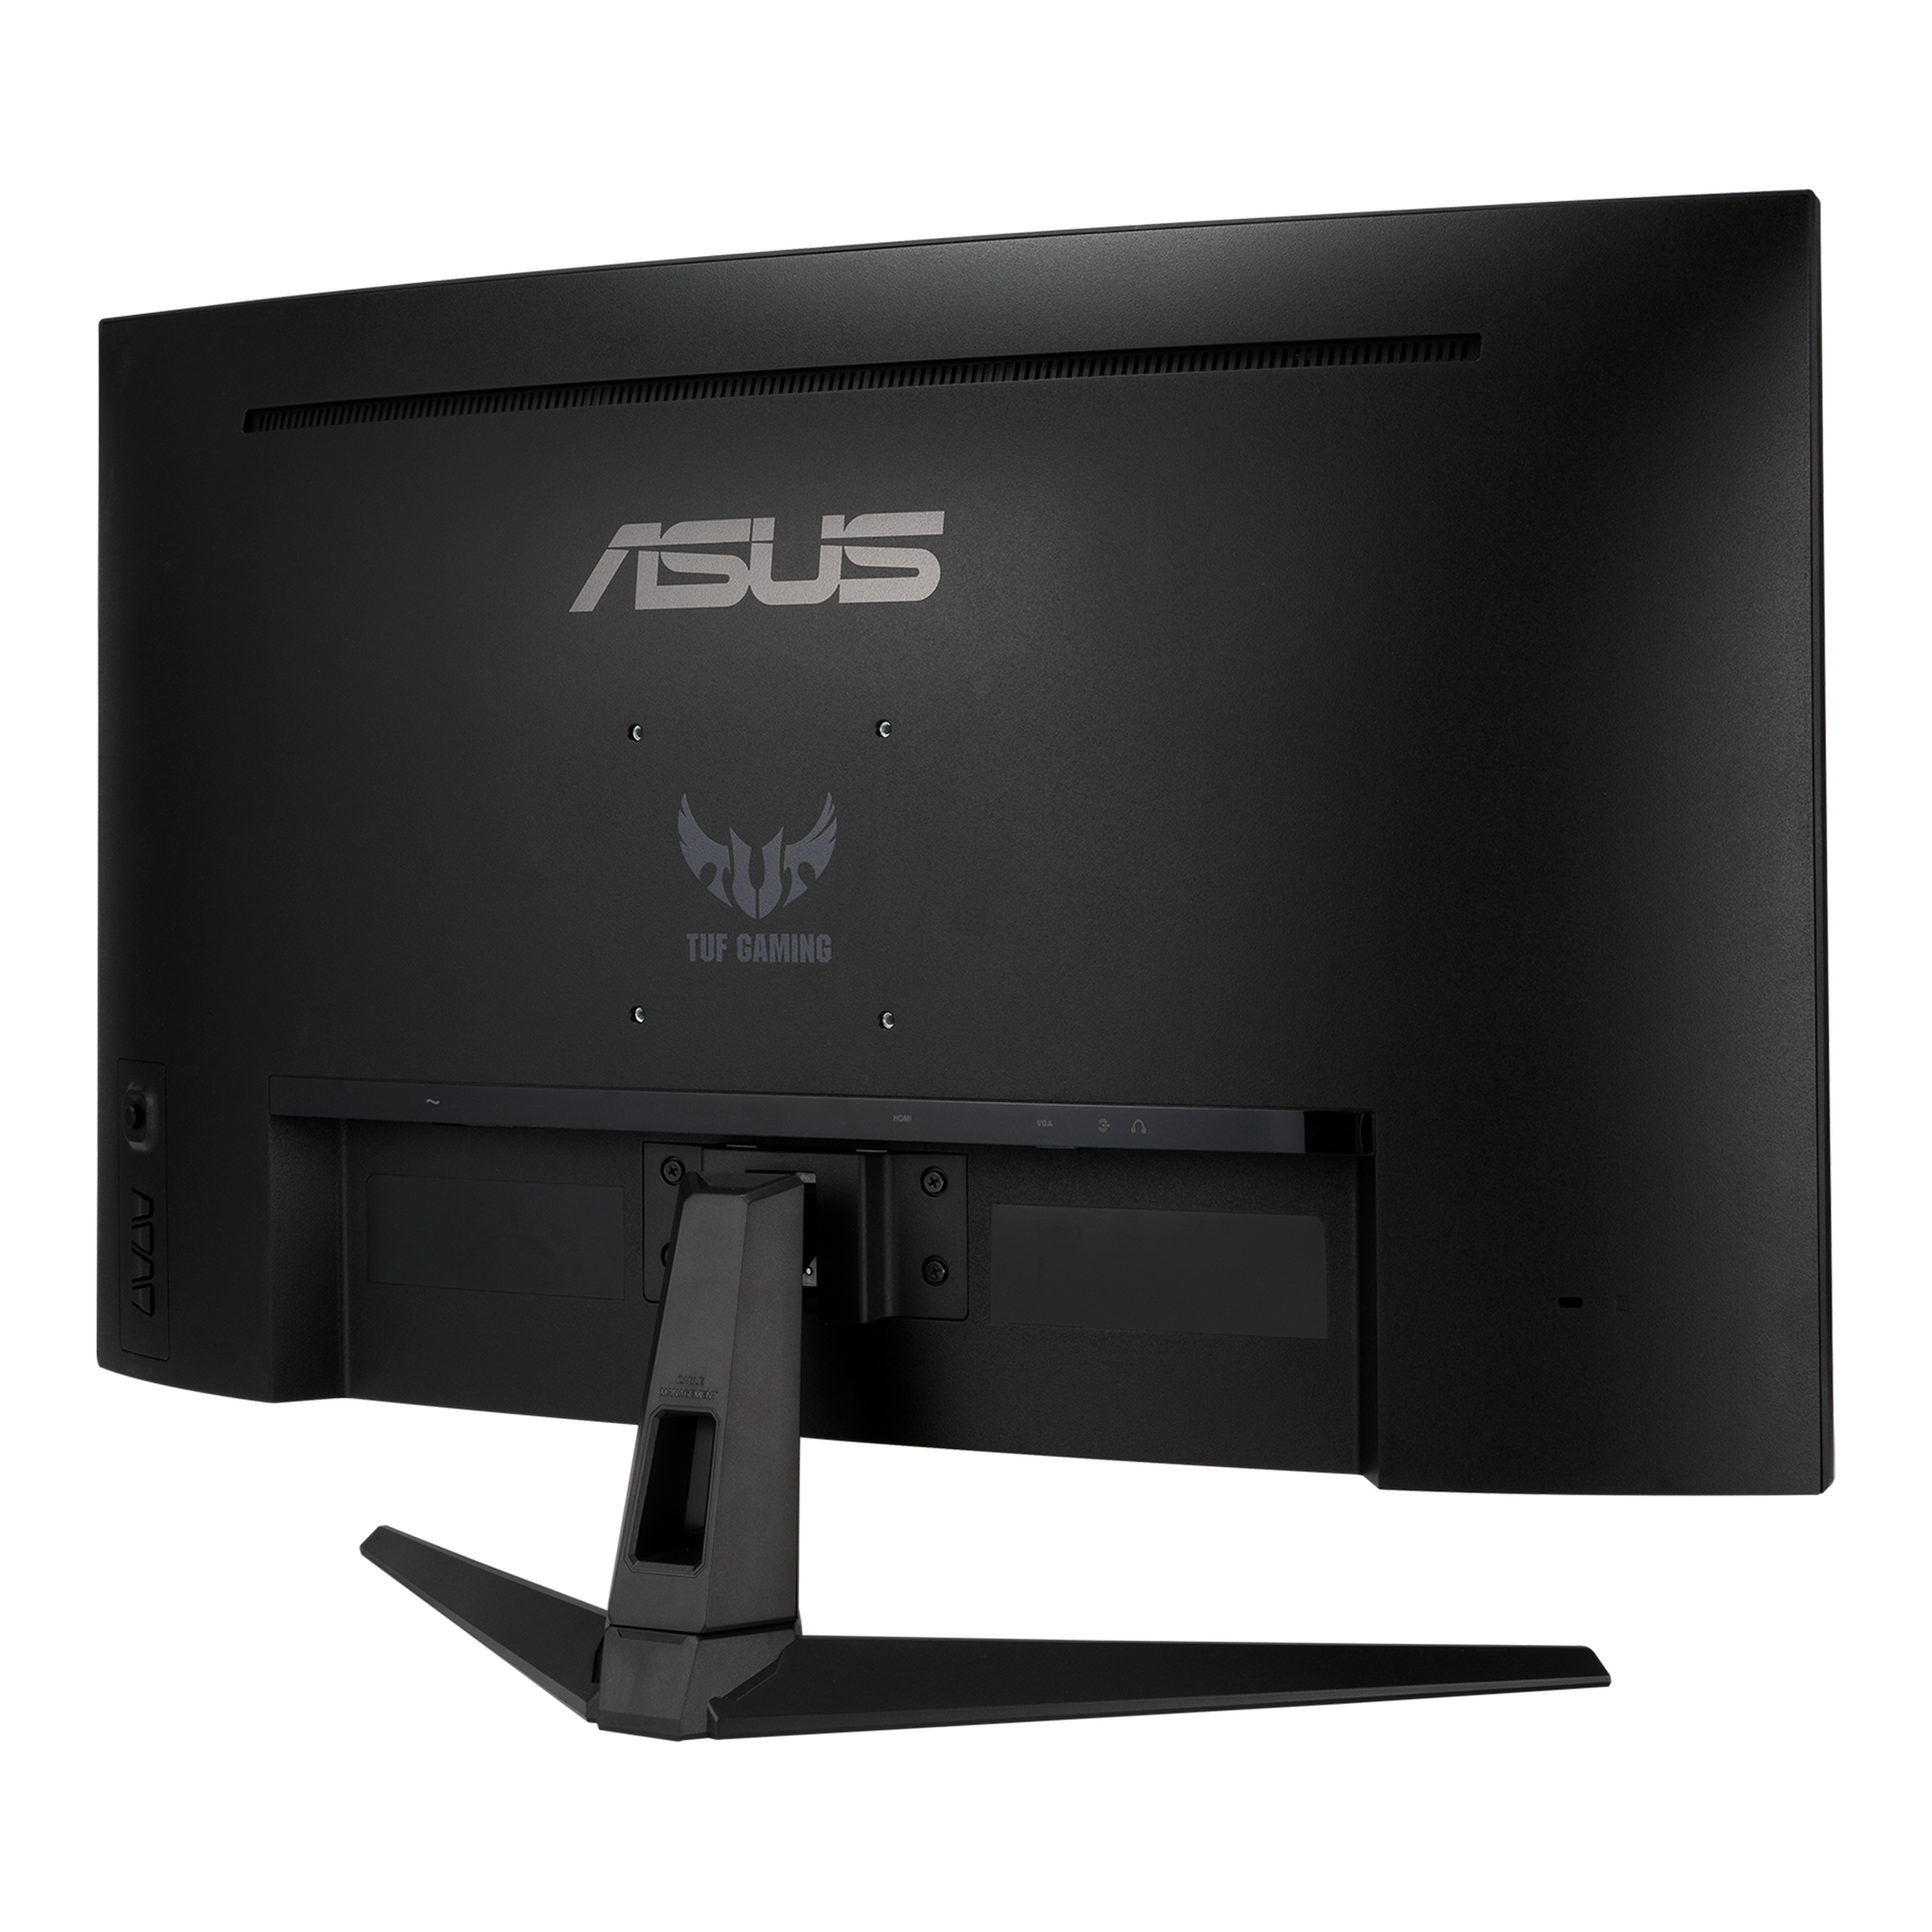 Asus gaming 31.5. "Монитор 31,5"" ASUS vg328h1b". Монитор ASUS vg32vq (vg32vq). Монитор игровой ASUS TUF Gaming vg328h1b 31.5". ASUS TUF Gaming vg32vq1b.